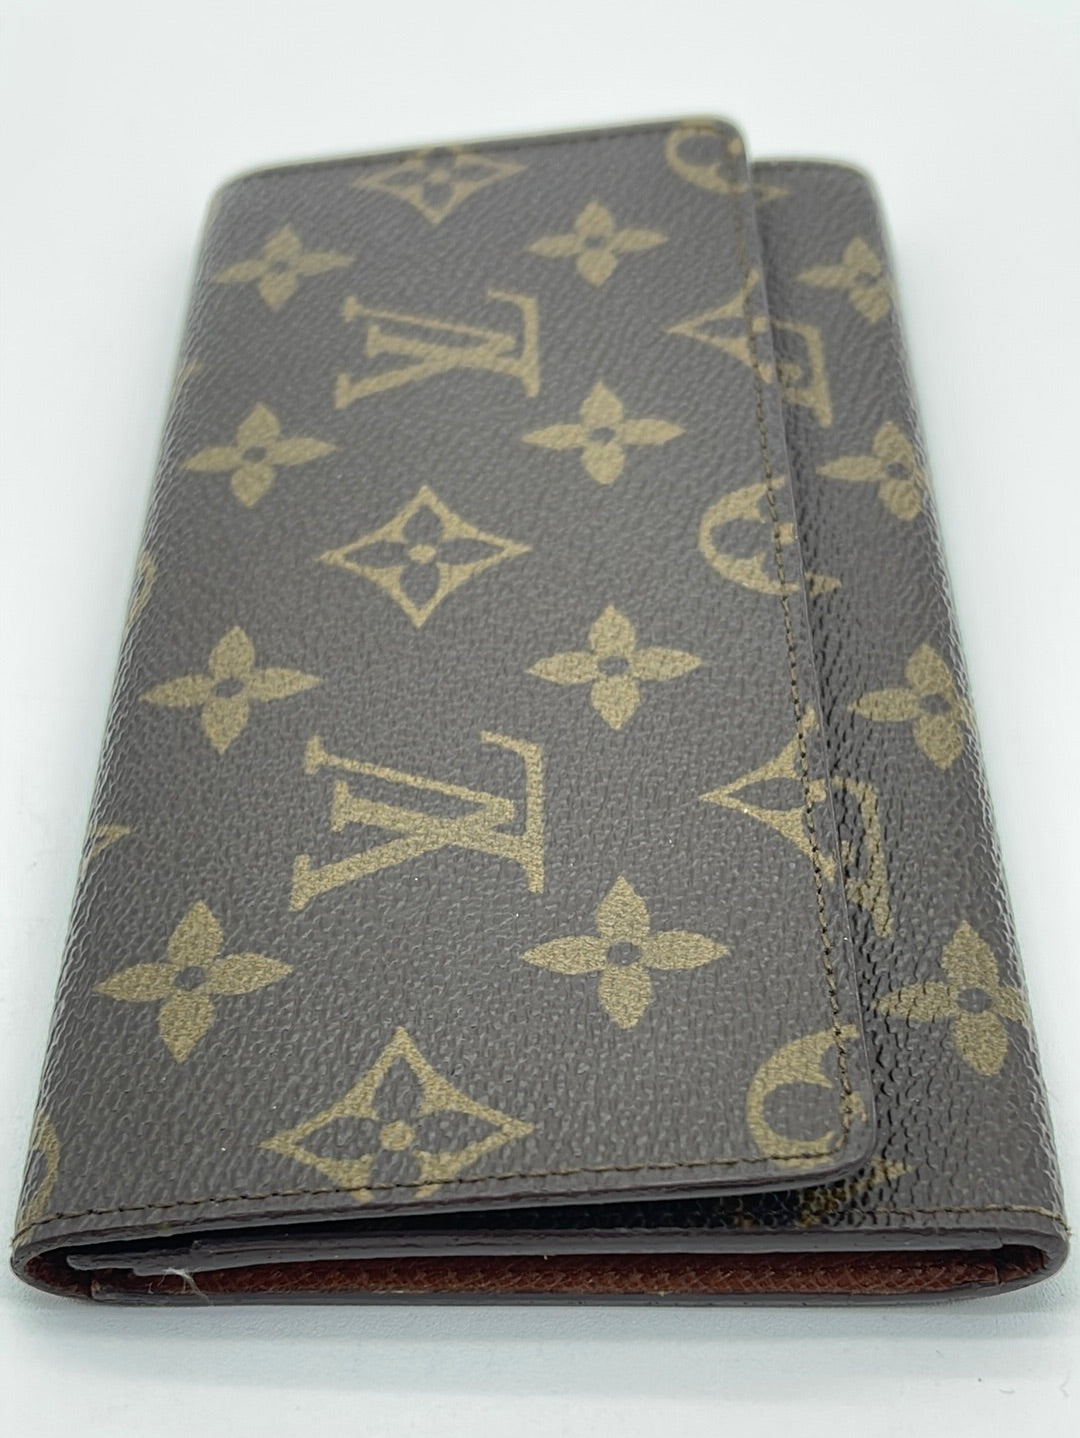 Trifold Louis Vuitton Checkbook Wallet Exterior Pocket Vintage 1980s Hard 2  Find